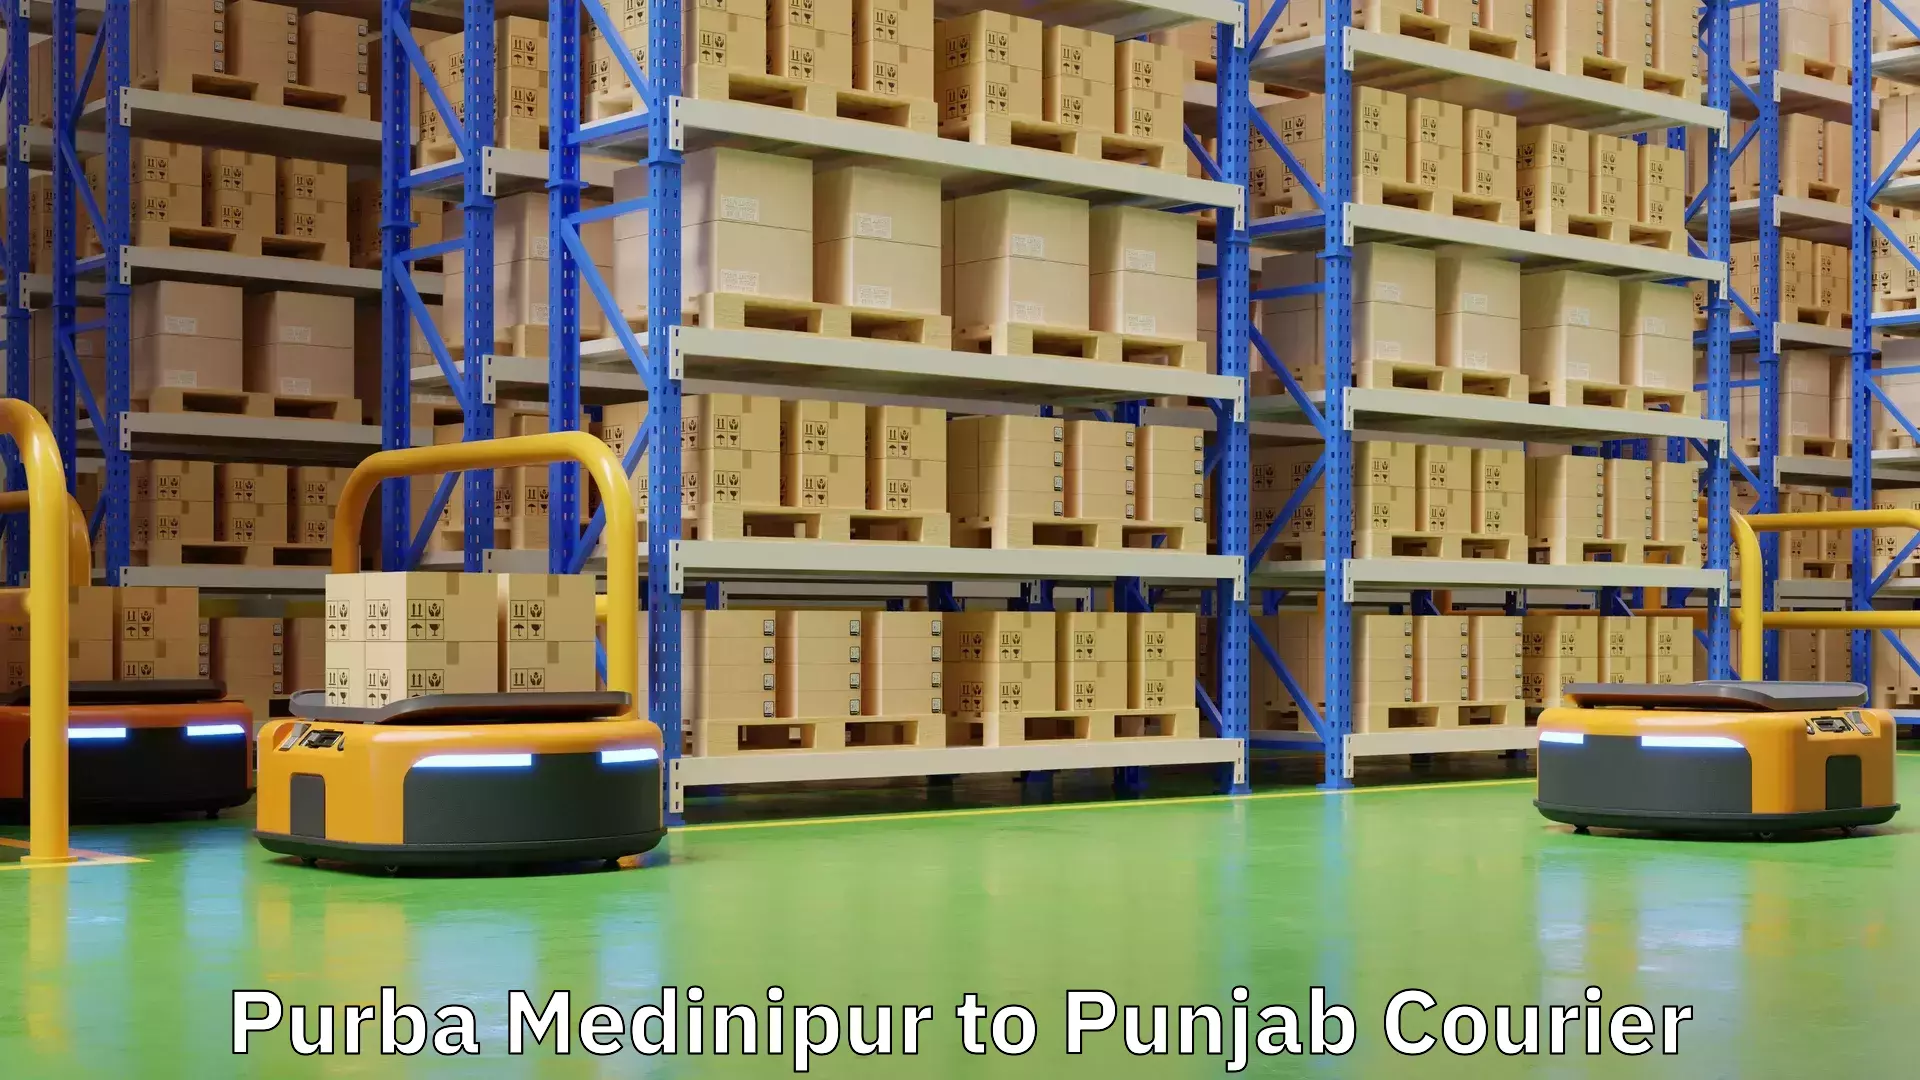 Courier service comparison Purba Medinipur to Punjab